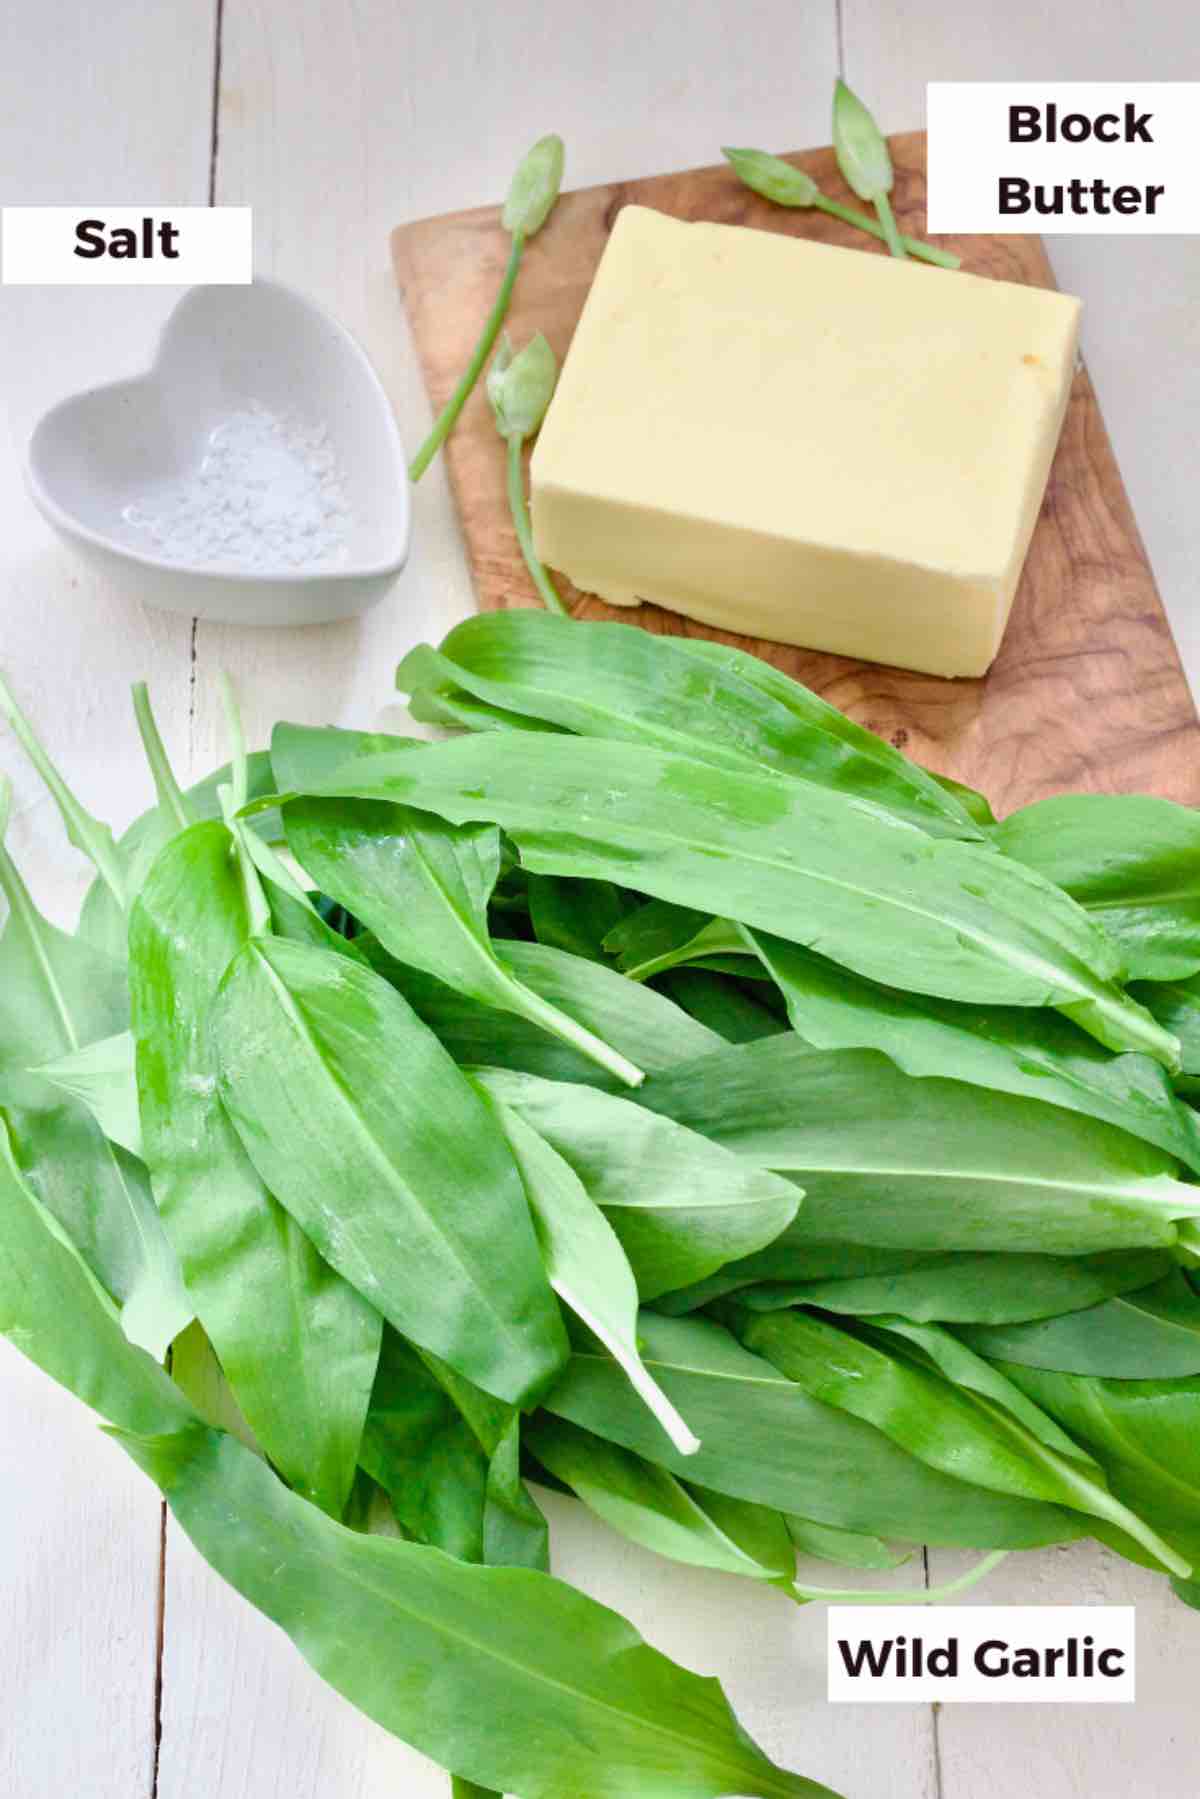 Ingredients for making wild garlic butter.